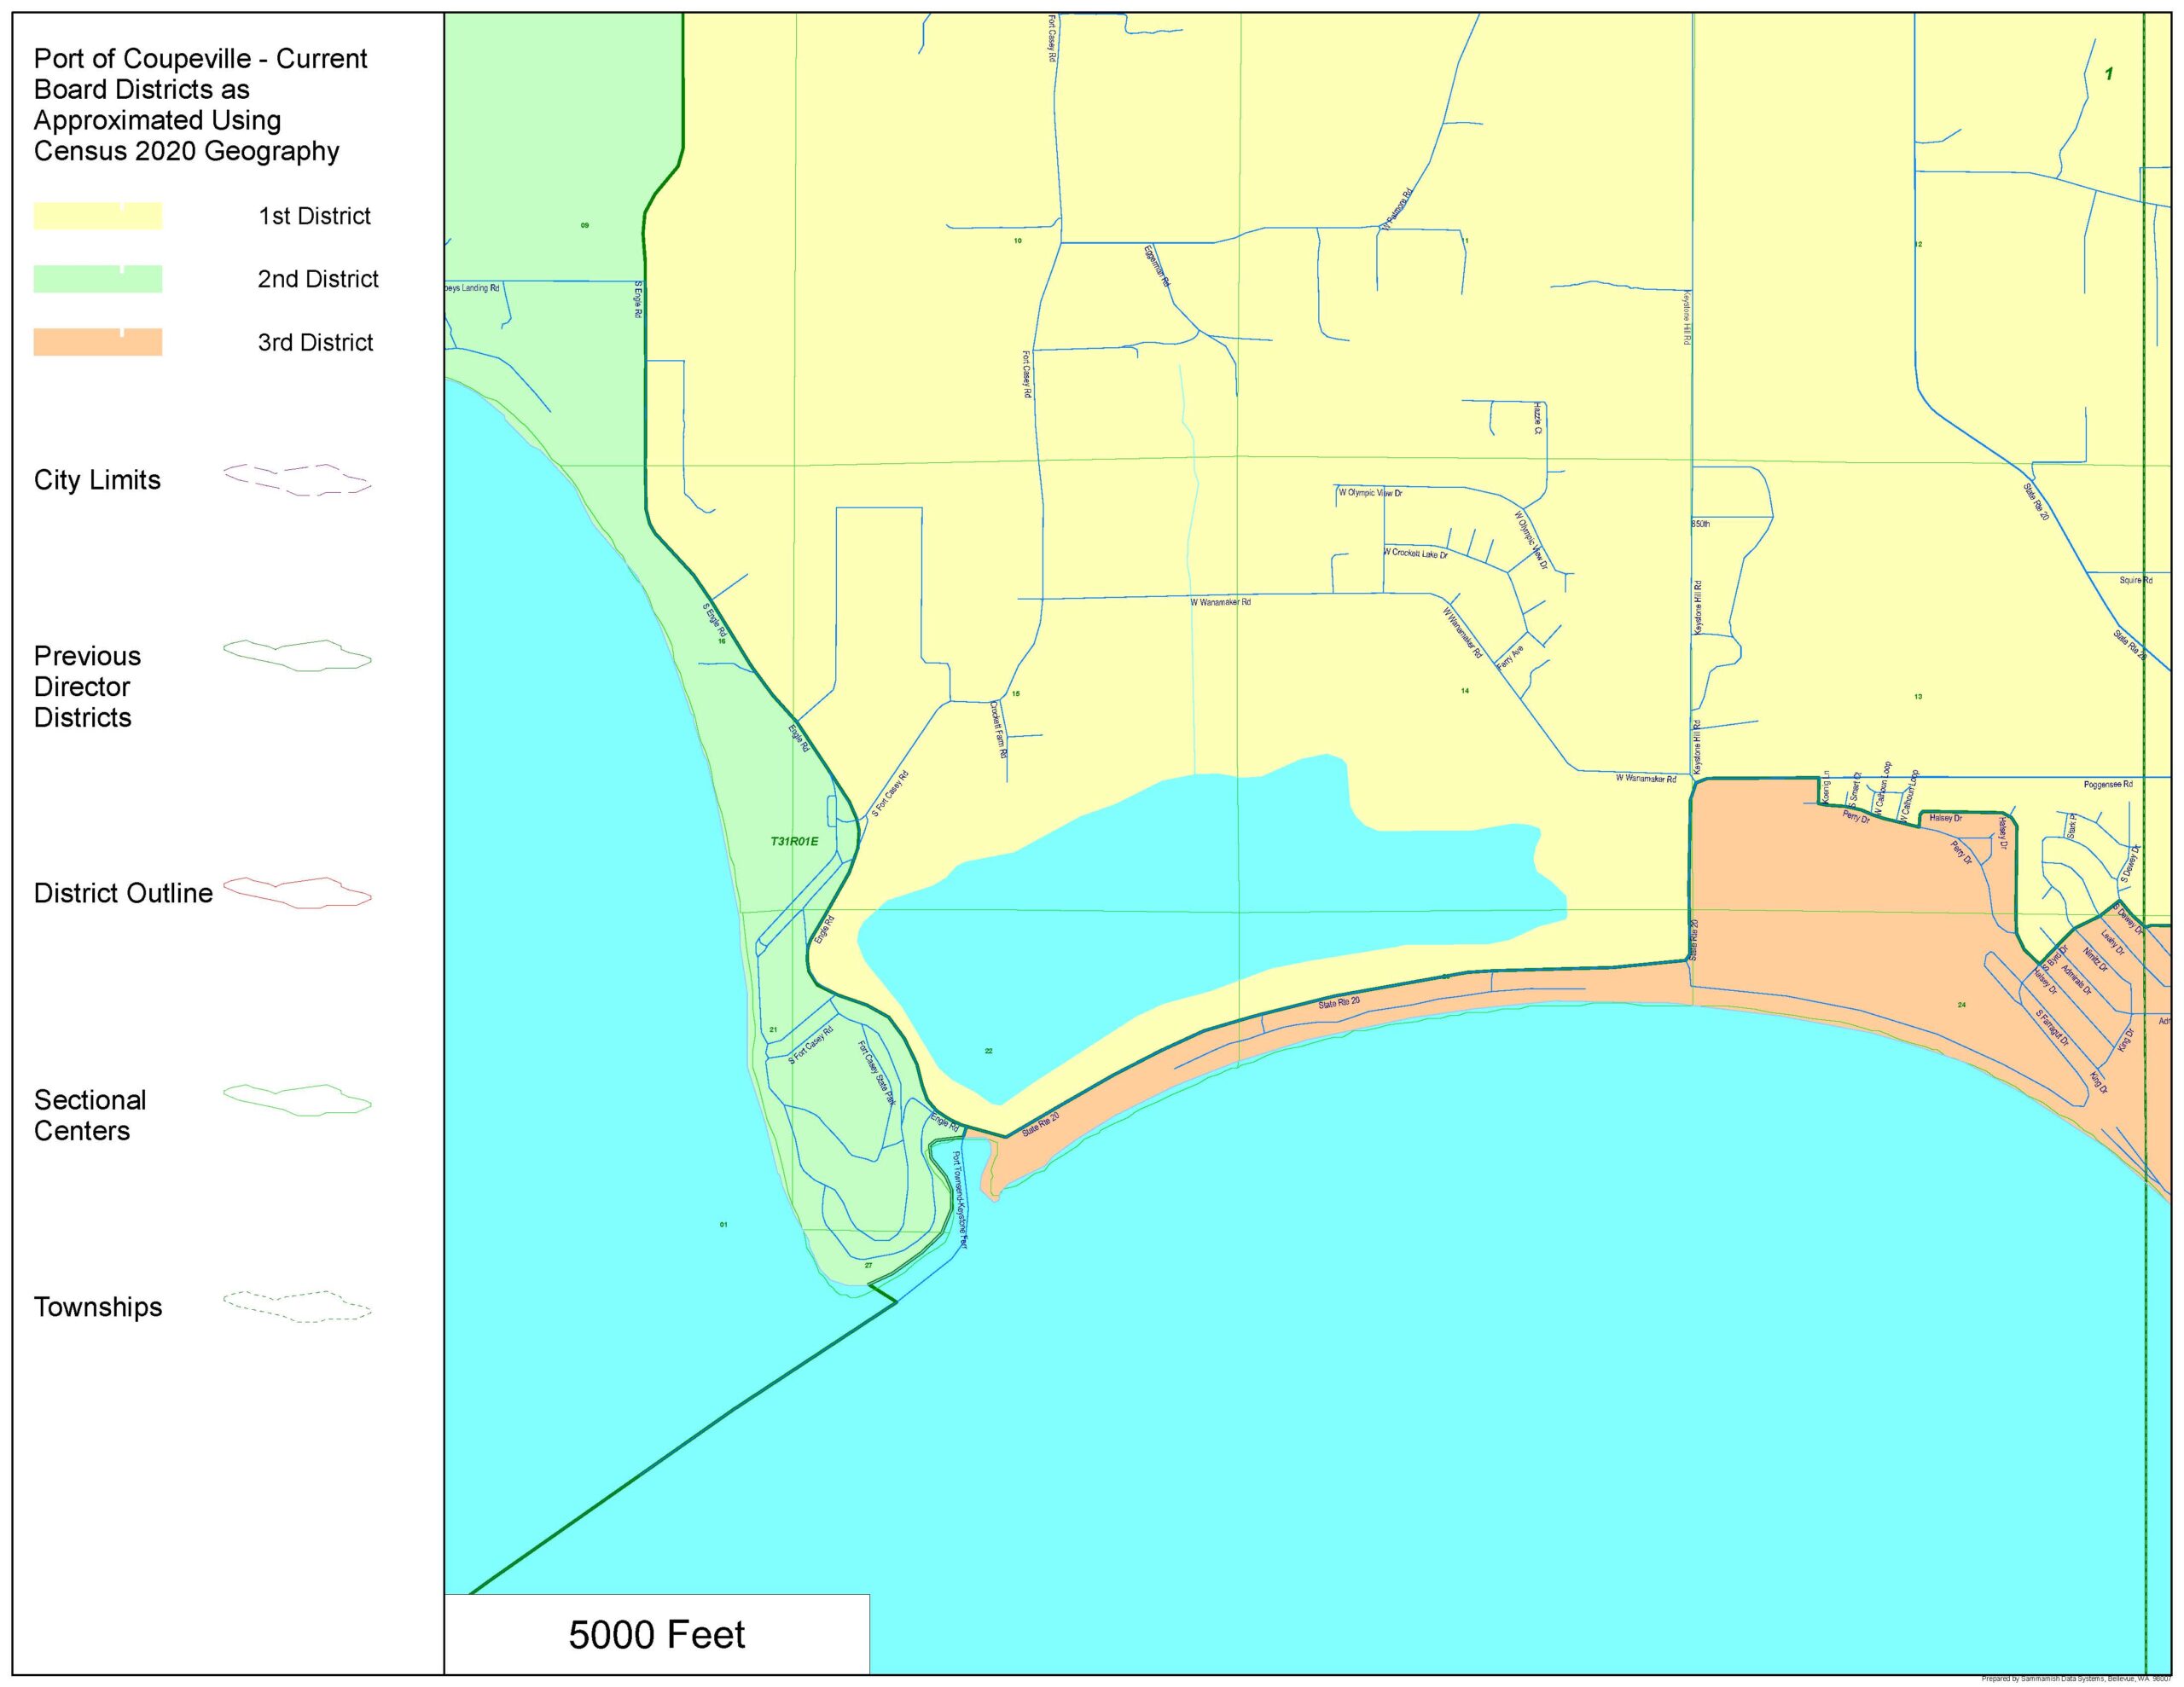 Port of Coupeville district boundaries 5